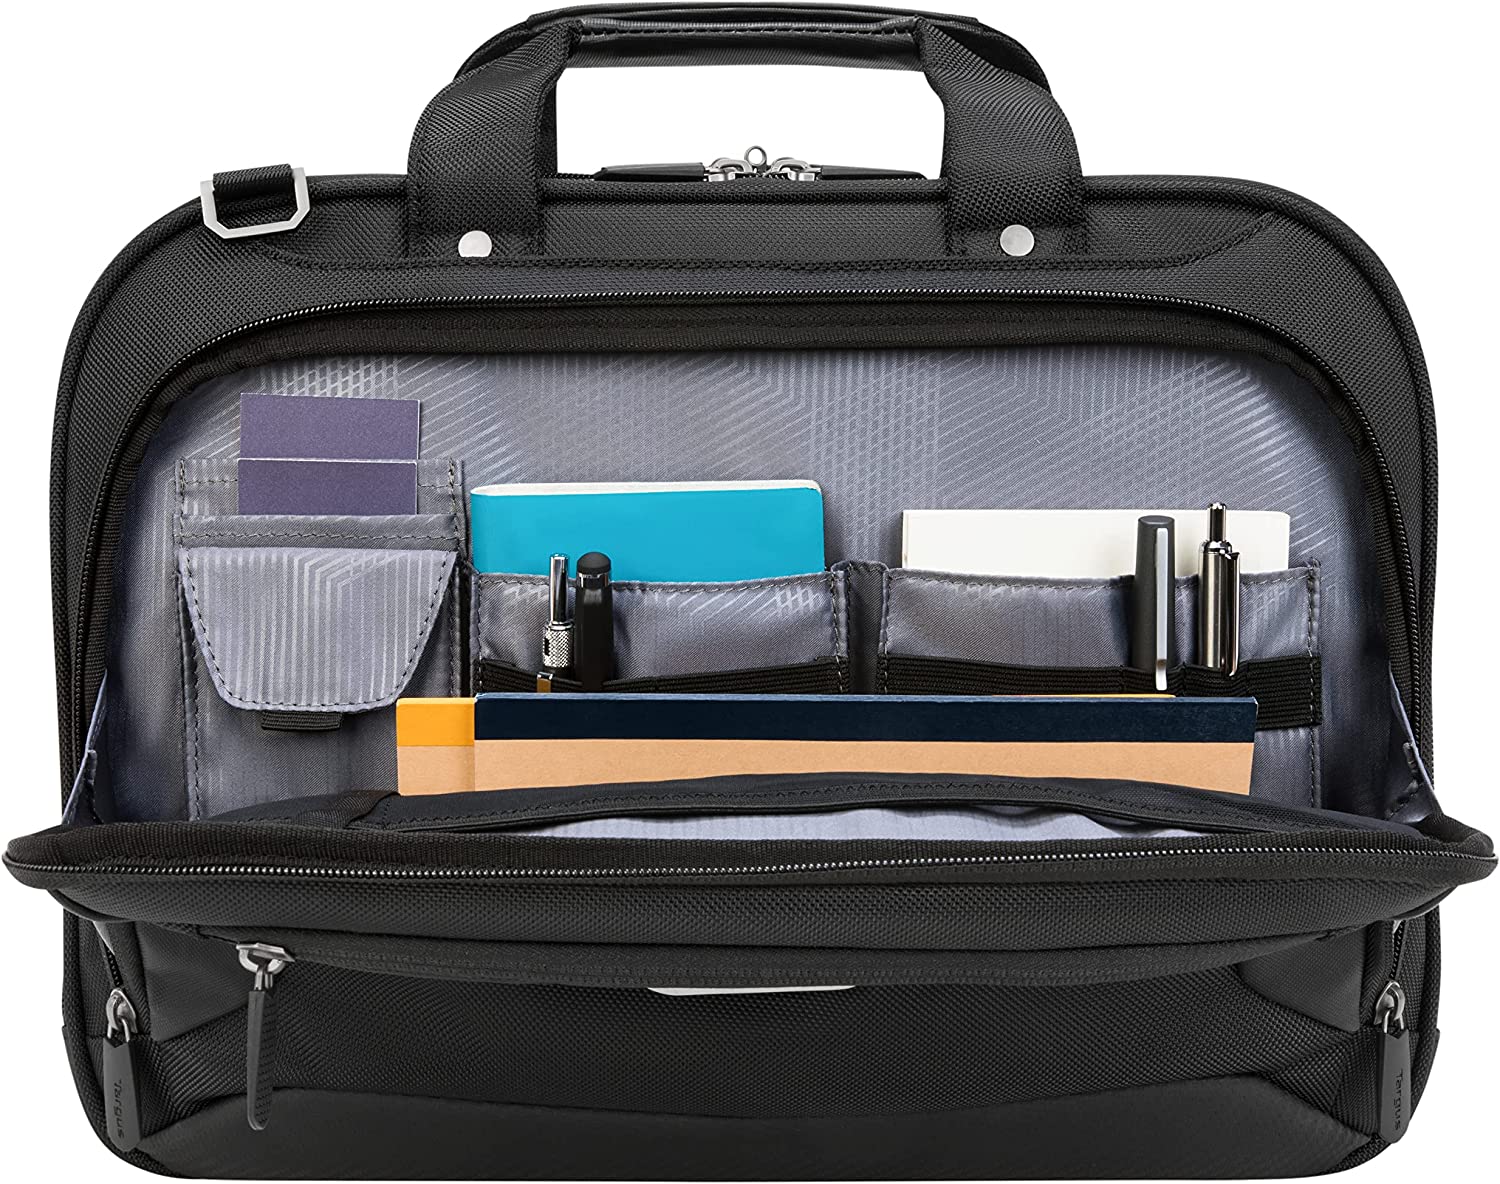 targus corporate traveler checkpoint-friendly traveler laptop case for 14-inch laptop, black (cuct02ua14s) - image 4 of 13